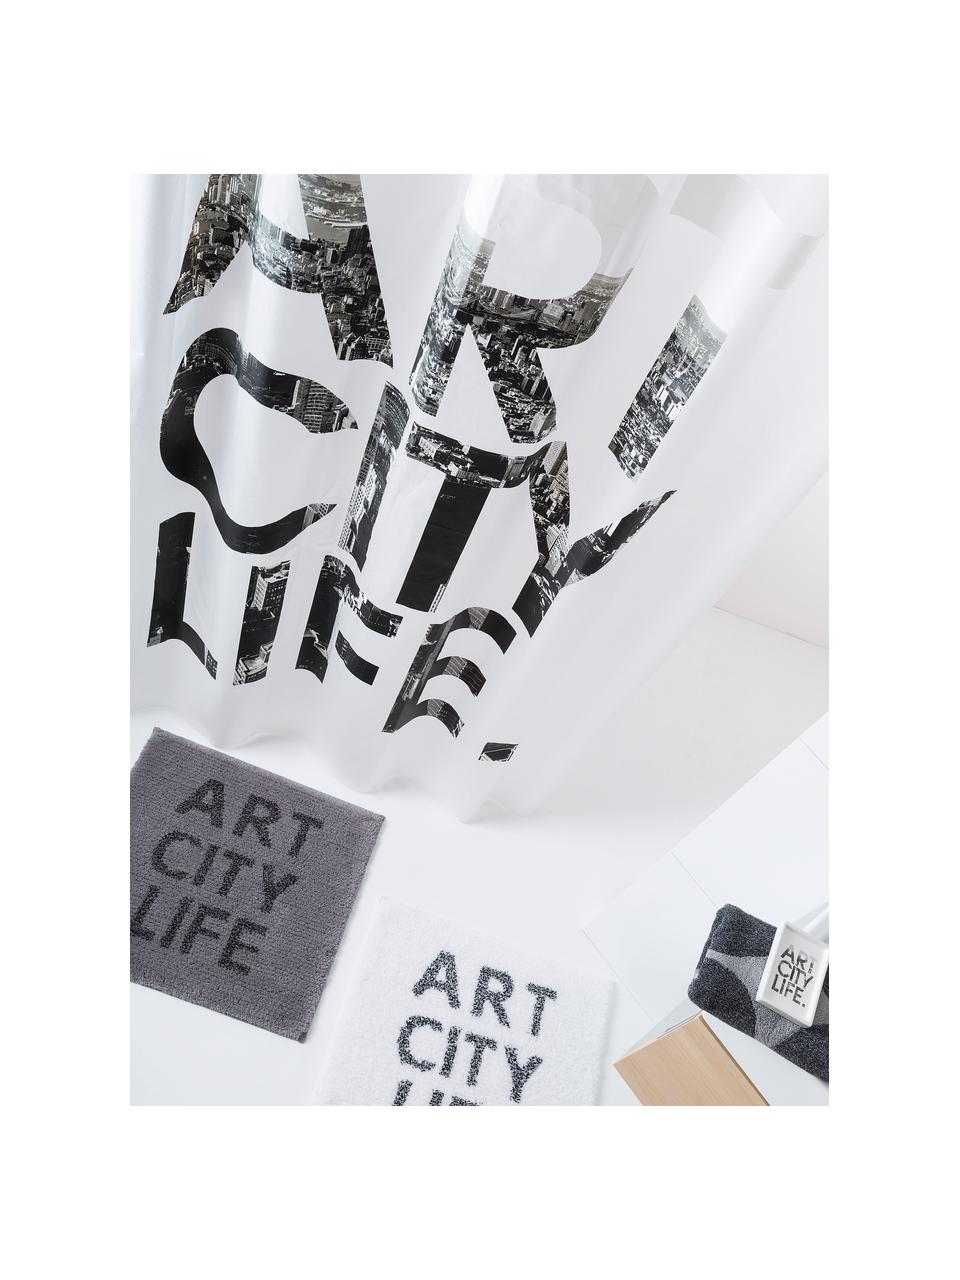 Duschvorhang Art City Life mit Schriftzug, Weiß, Schwarz, Grau, 180 x 200 cm